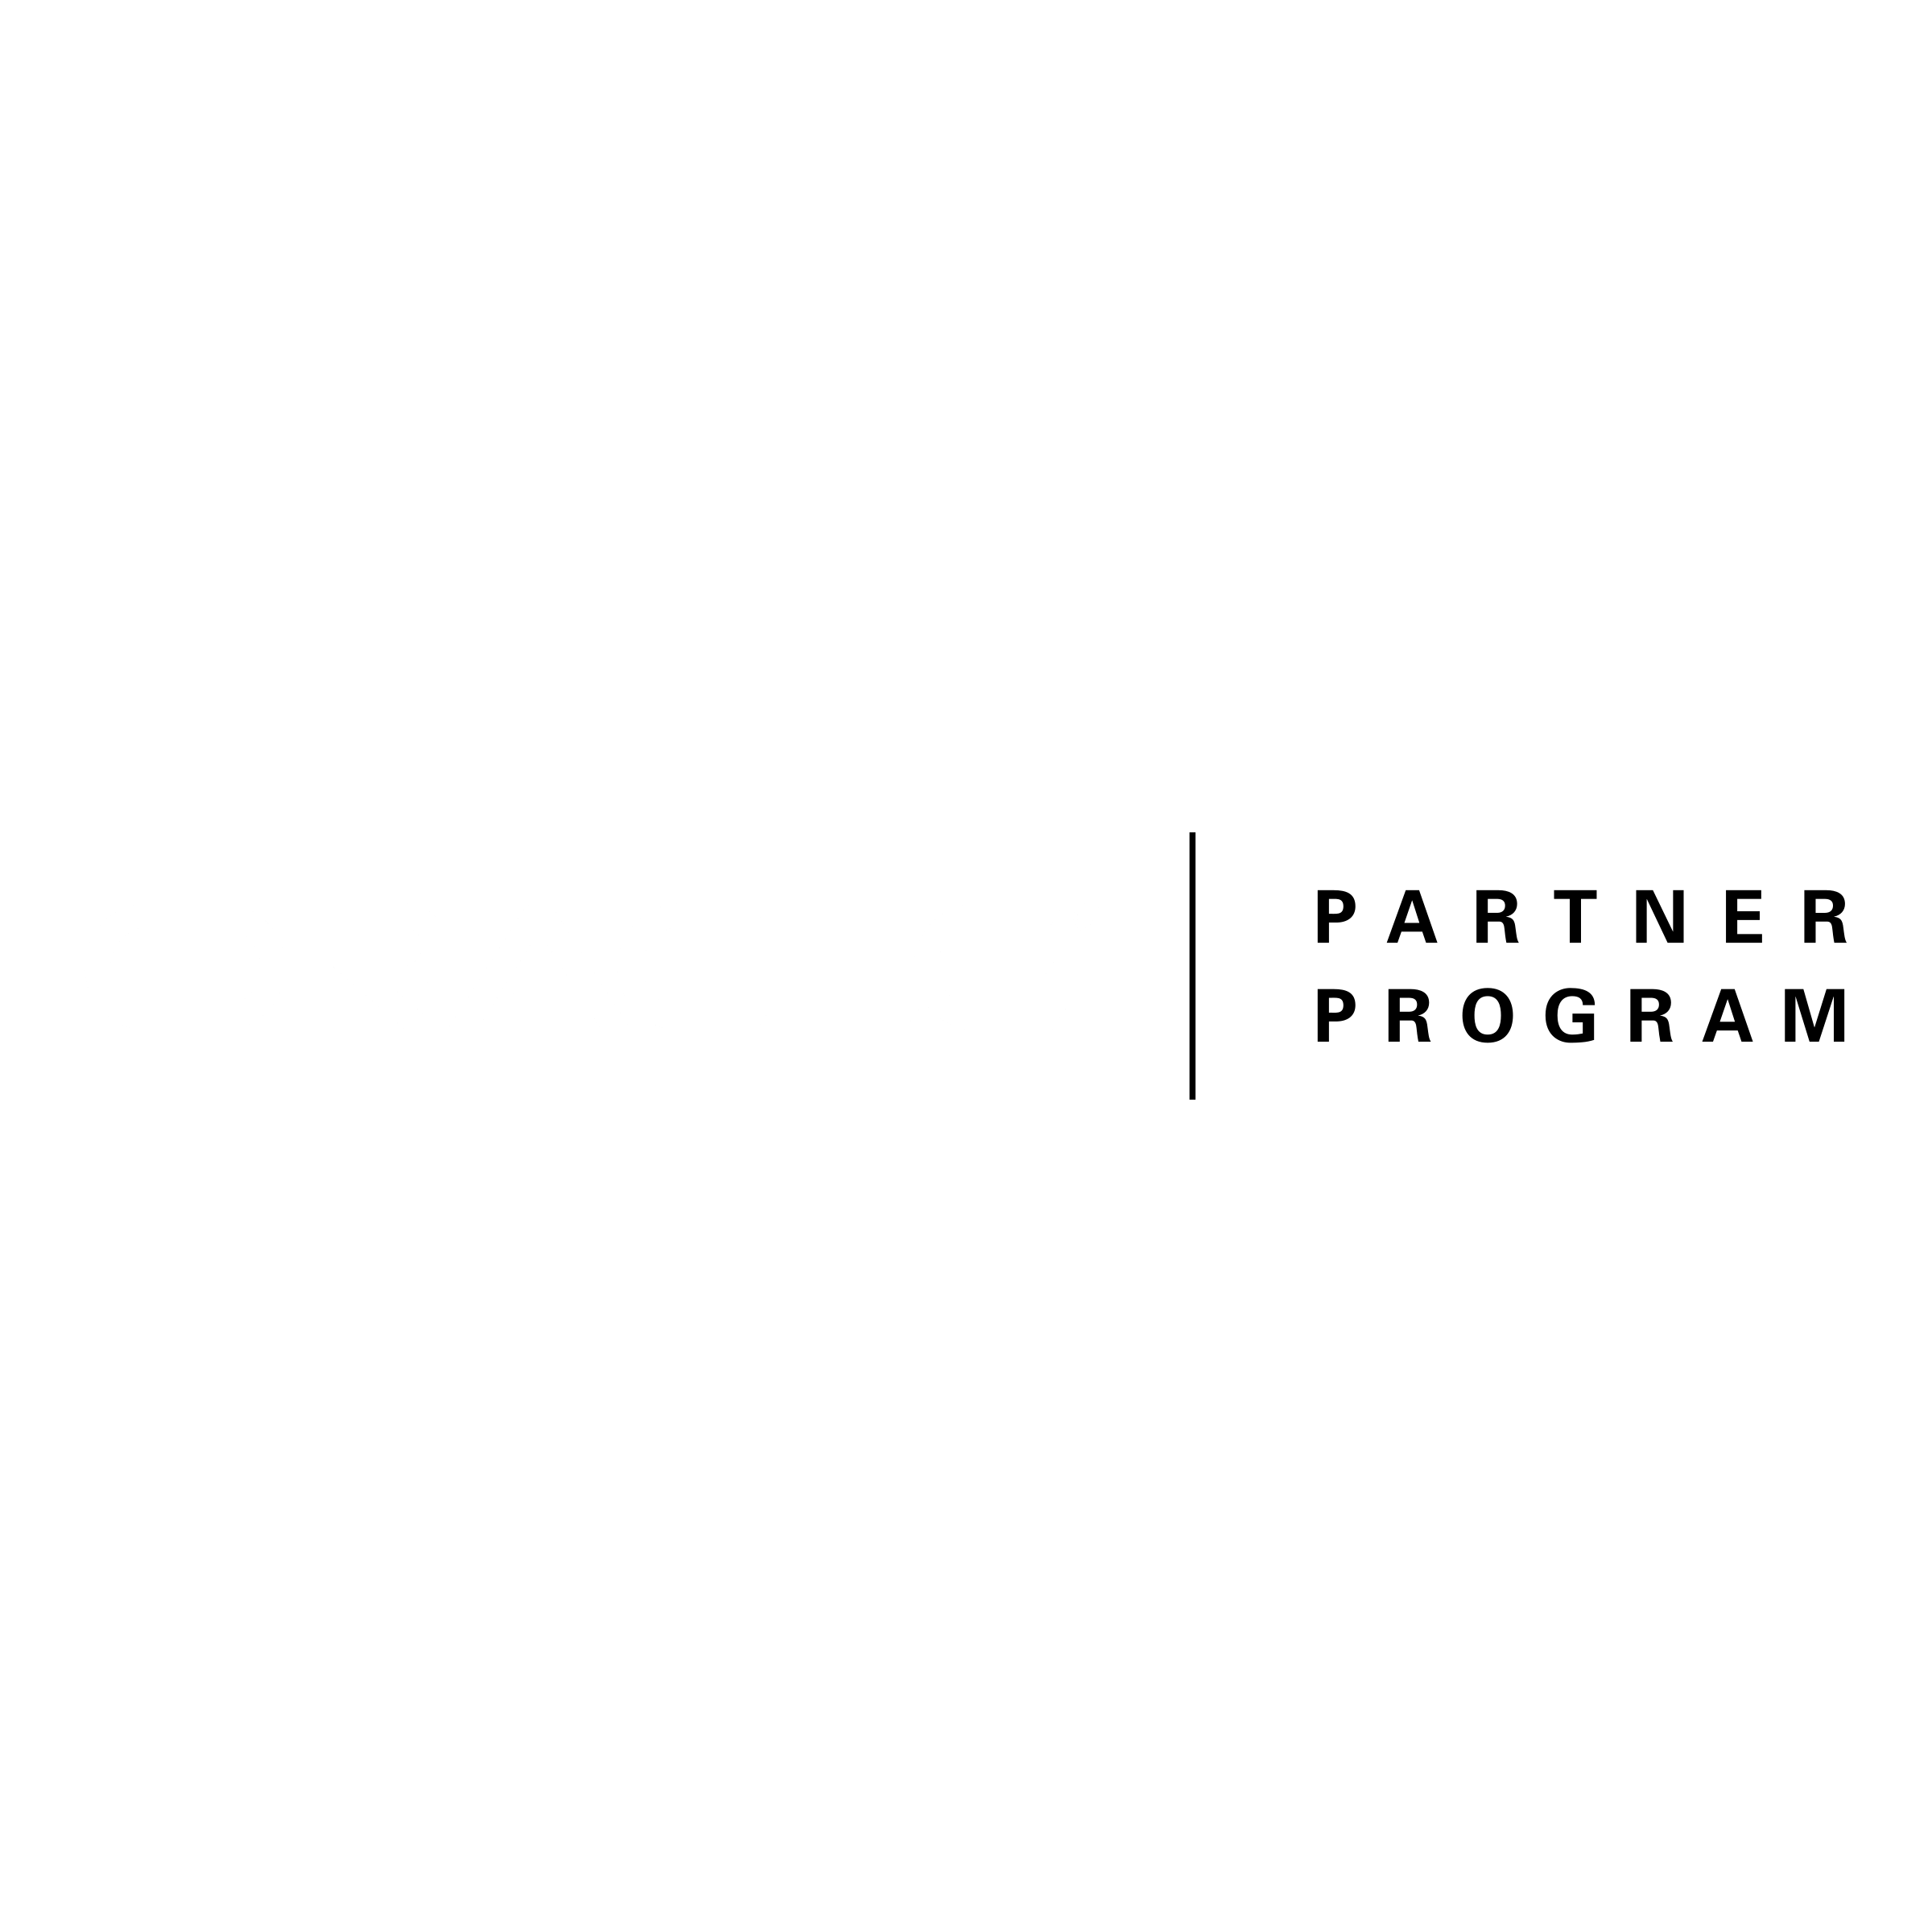 Black Oracle Logo - Oracle Logo PNG Transparent & SVG Vector - Freebie Supply